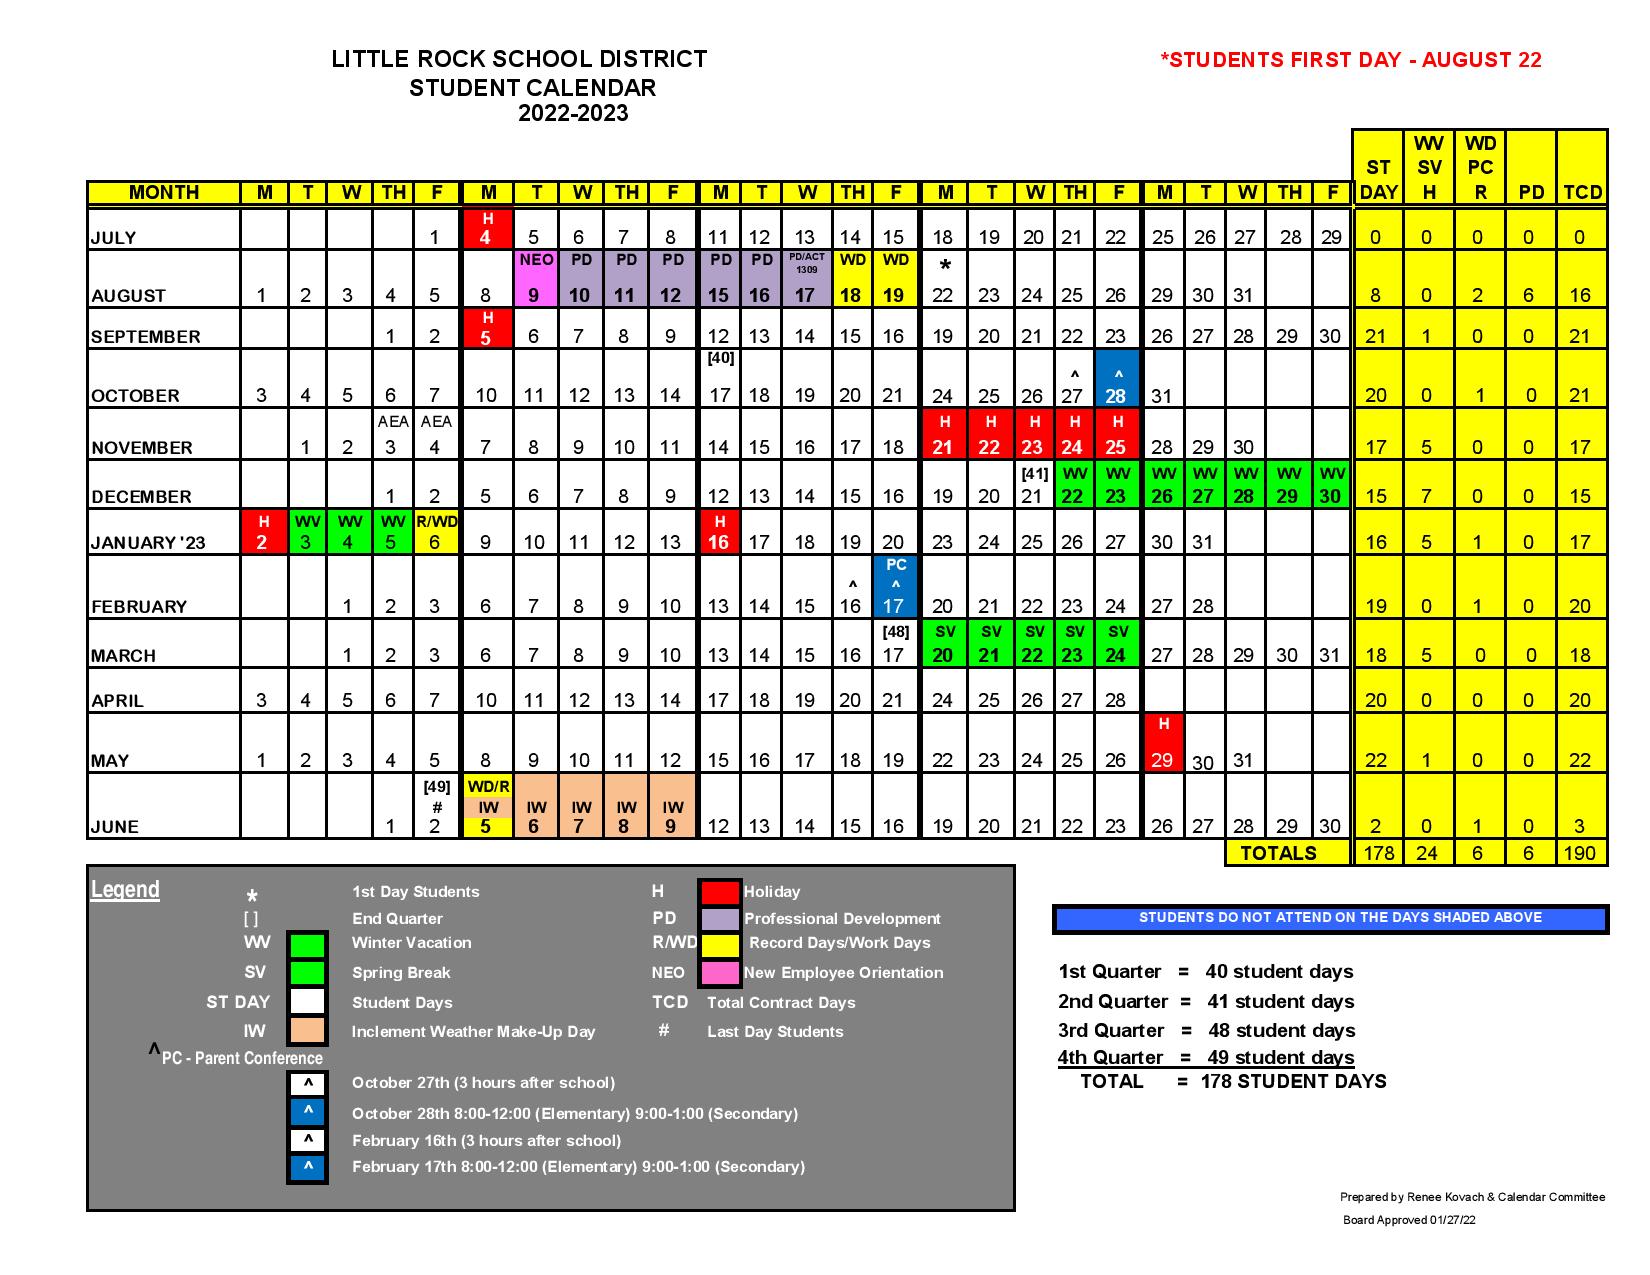 Little Rock School District Calendar Holidays 2022 2023 PDF School